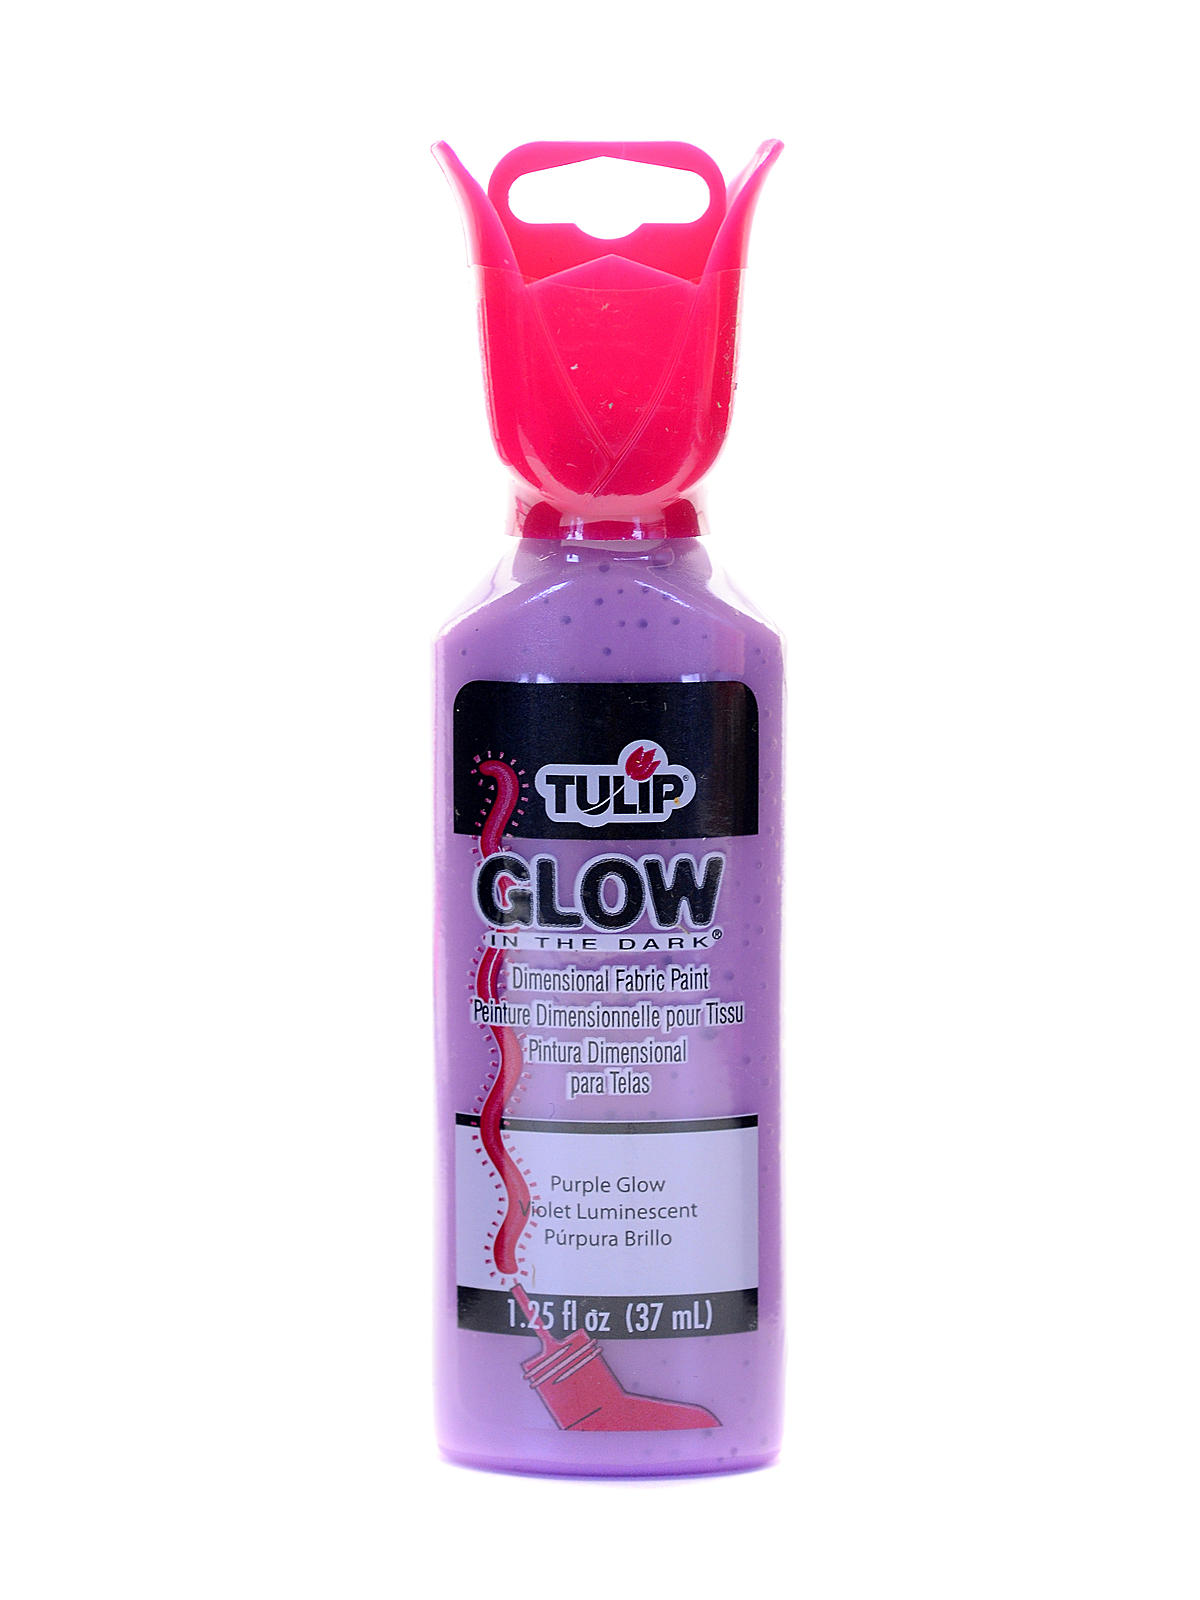 Tulip Dimensional Fabric Paint 1.25 fl oz Glow in the Dark 6 Pack with  Bonus 